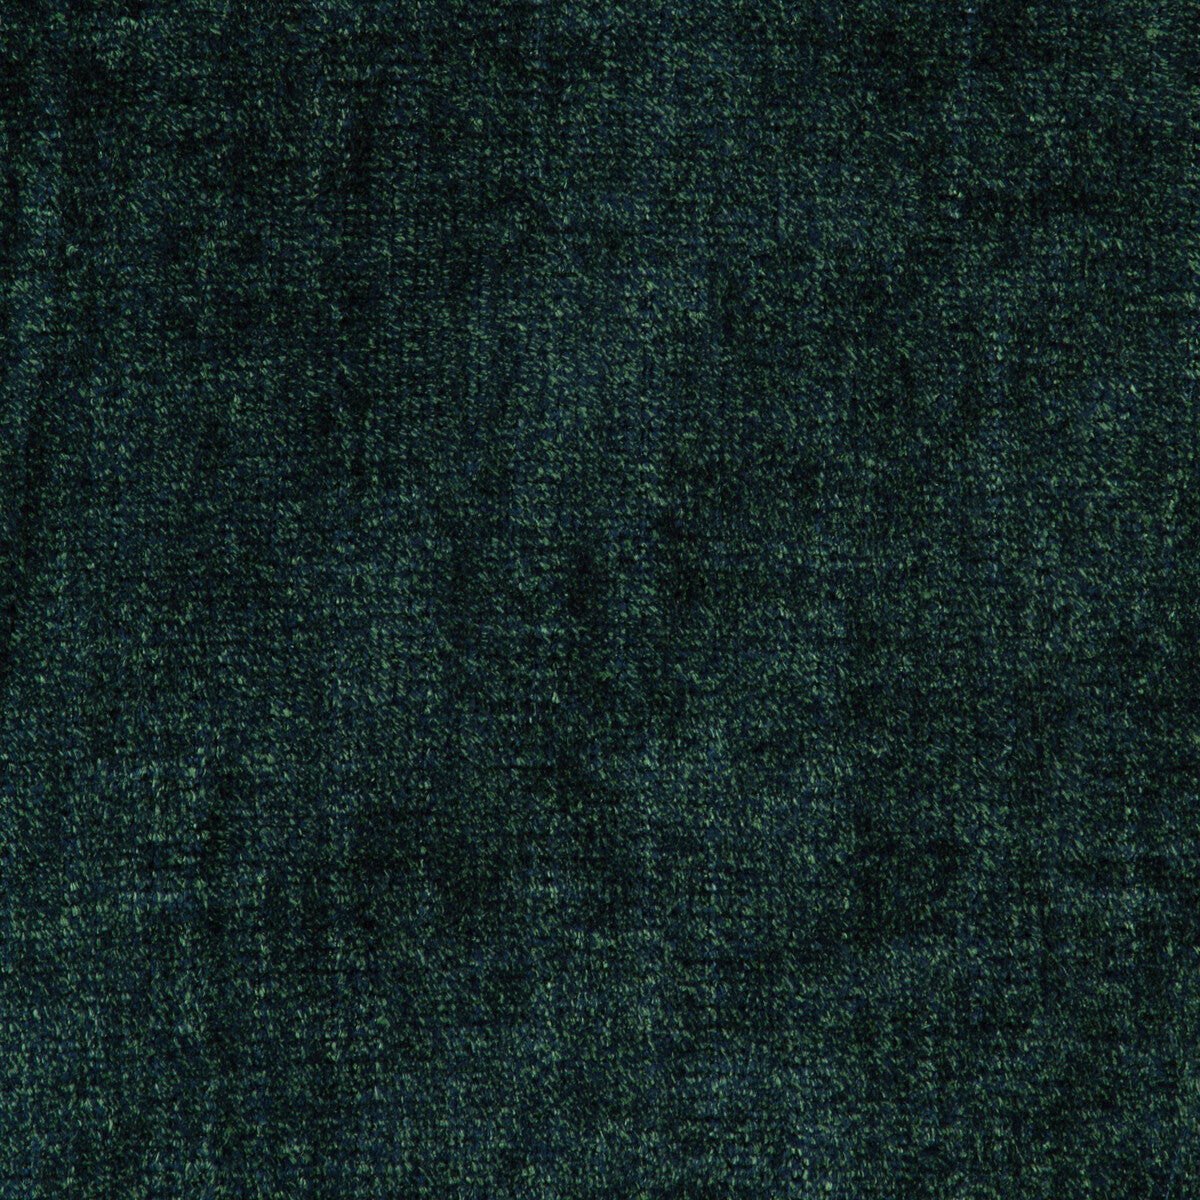 Kravet Smart fabric in 36995-3535 color - pattern 36995.3535.0 - by Kravet Smart